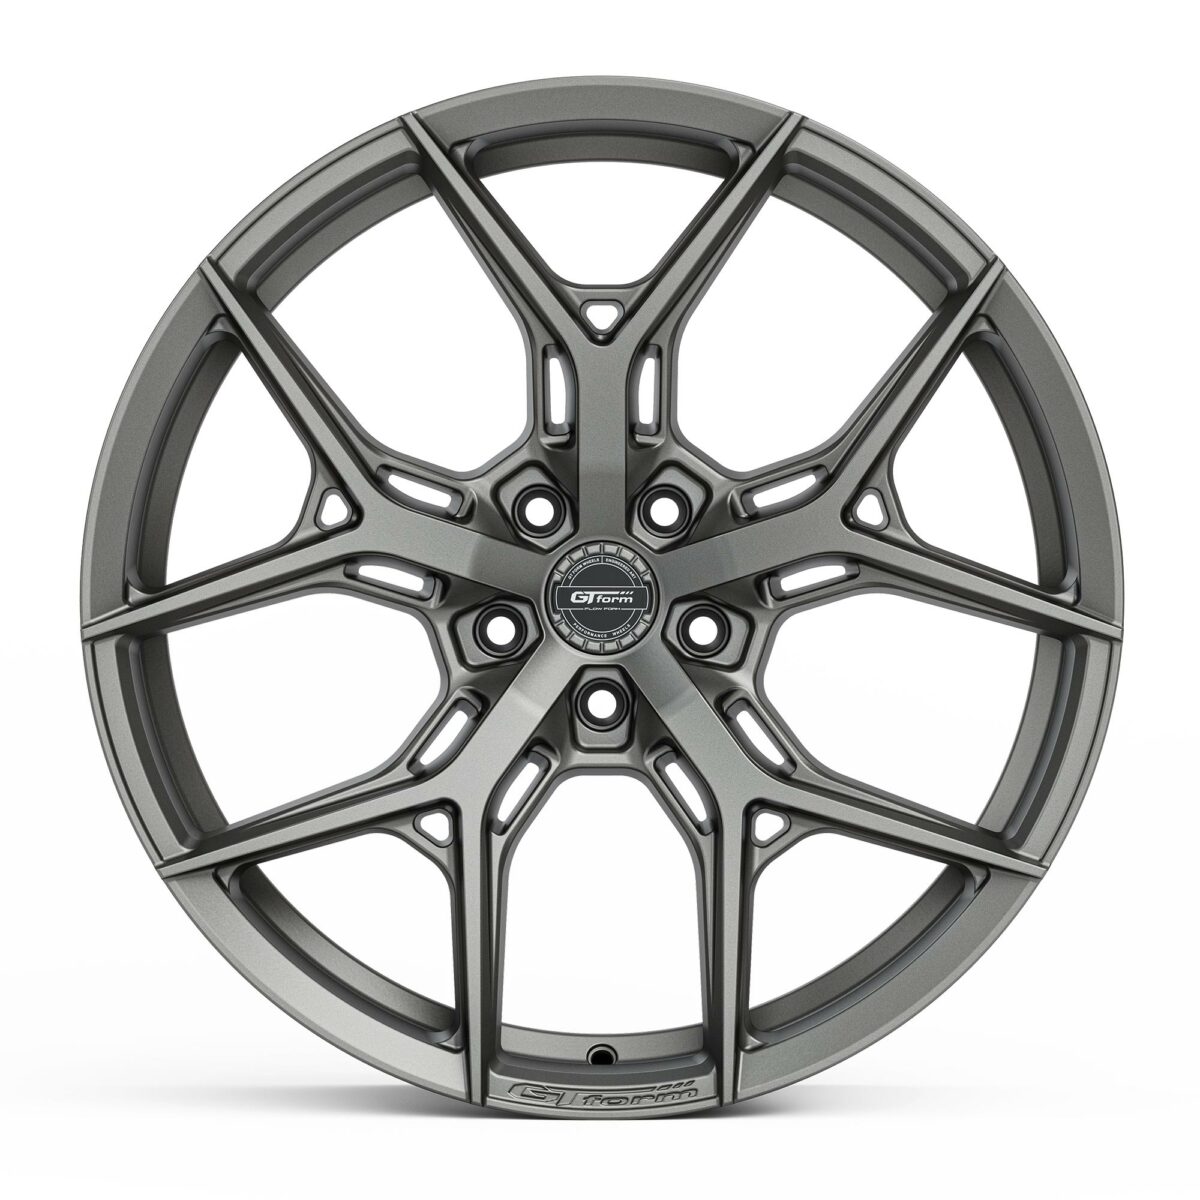 GT Form Torque Satin Gunmetal Grey Staggered Rims 20 22 inch Performance Wheels